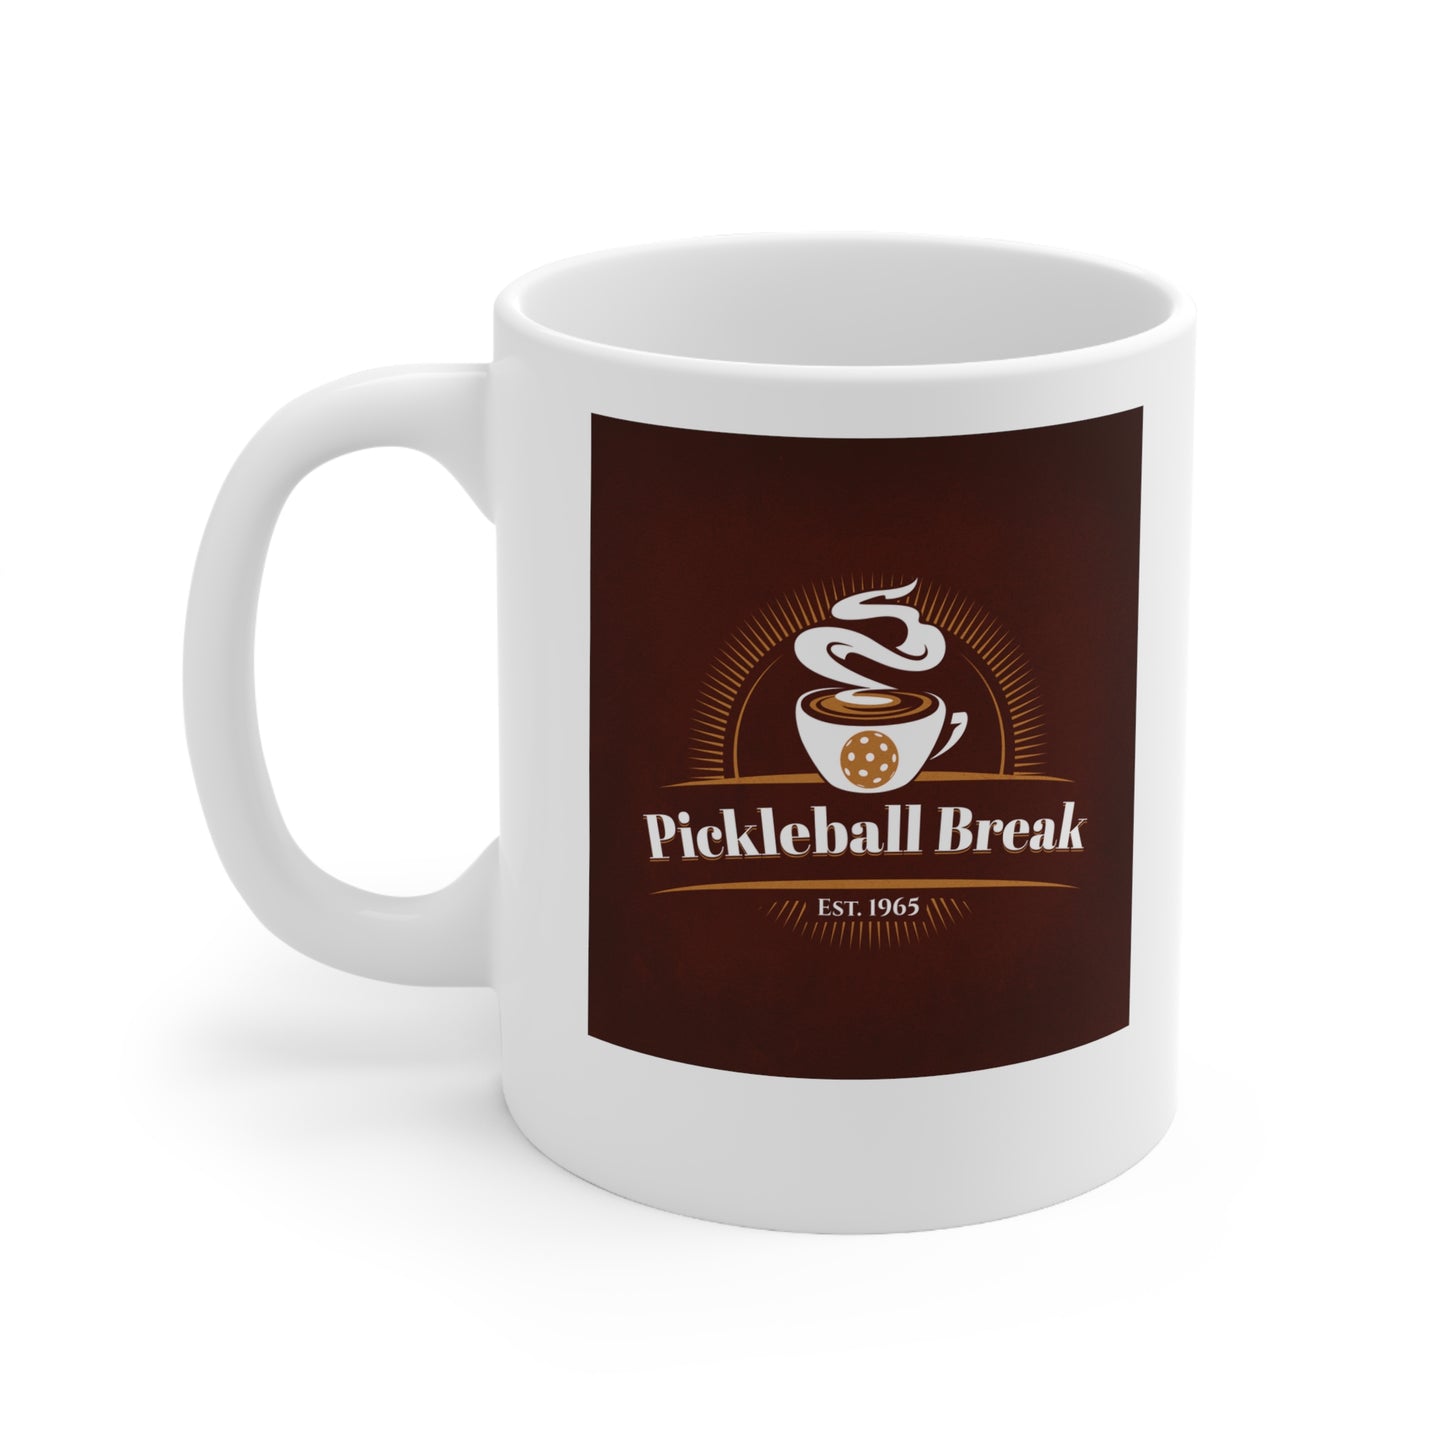 Pickleball Coffee Mug - Pickleball Break, Established 1965